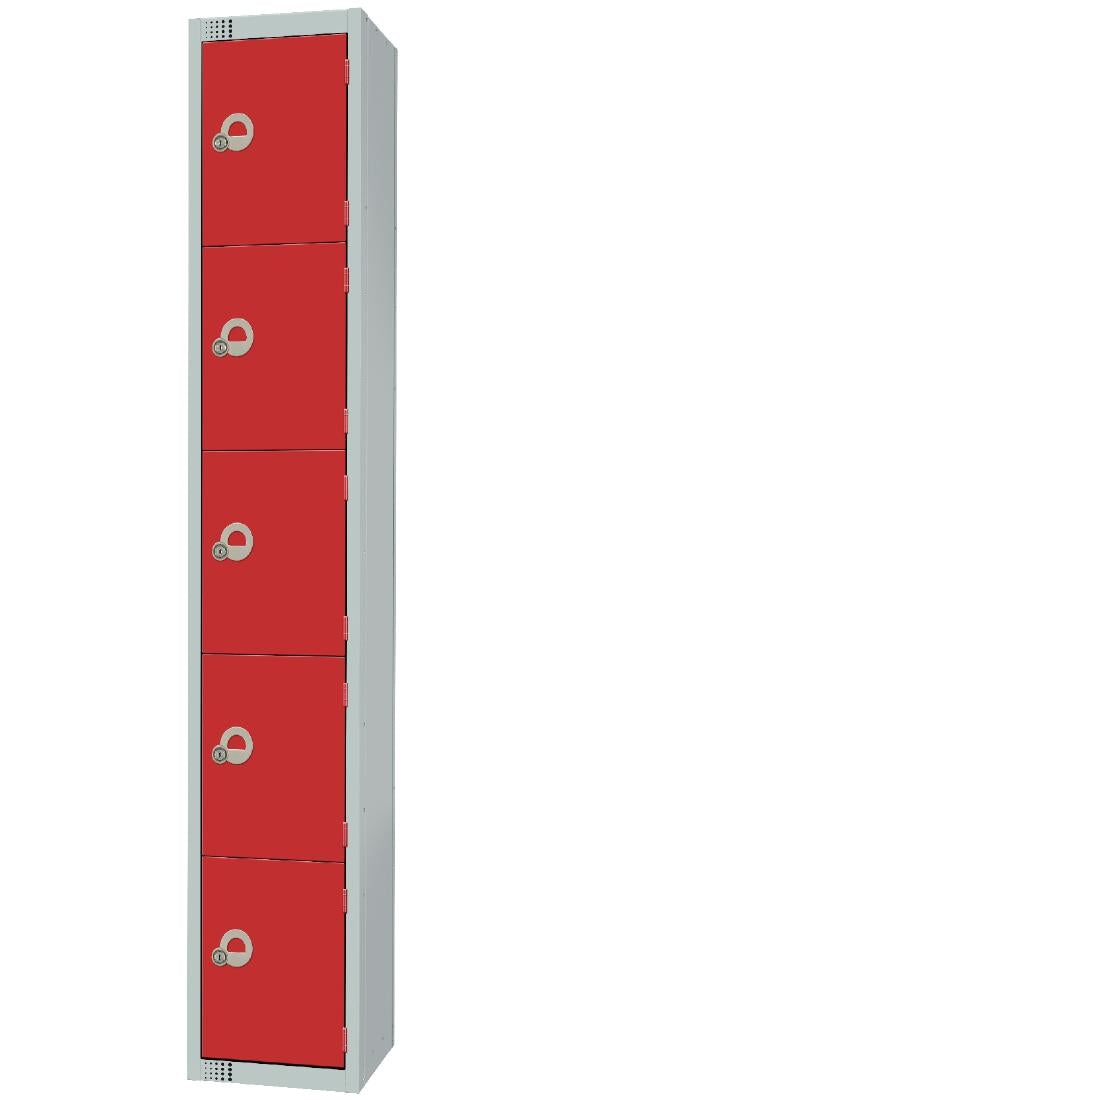 CG618-ELS Elite Five Door Electronic Combination Locker with Sloping Top Red JD Catering Equipment Solutions Ltd